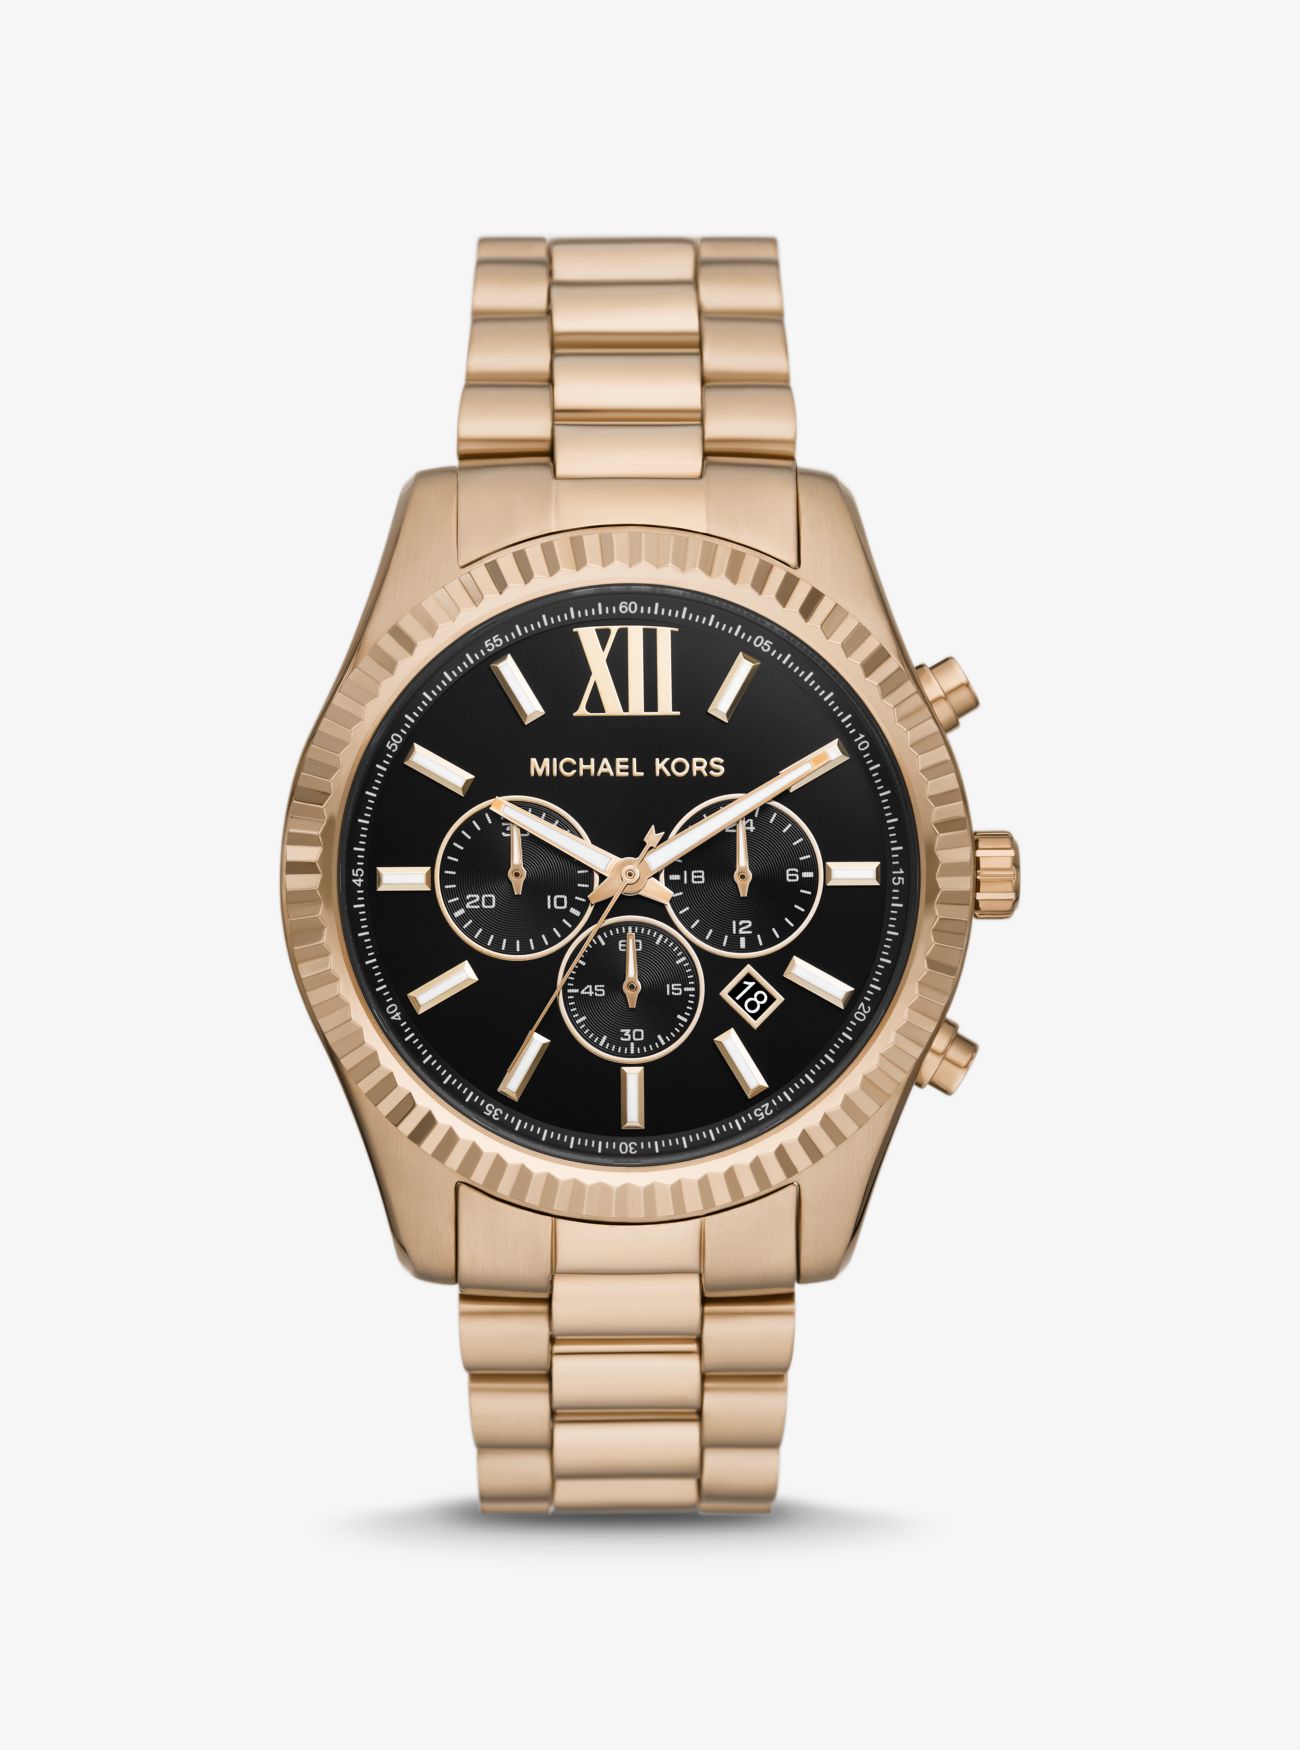 MK Oversized Lexington Beige Gold-Tone Watch - Husk - Michael Kors